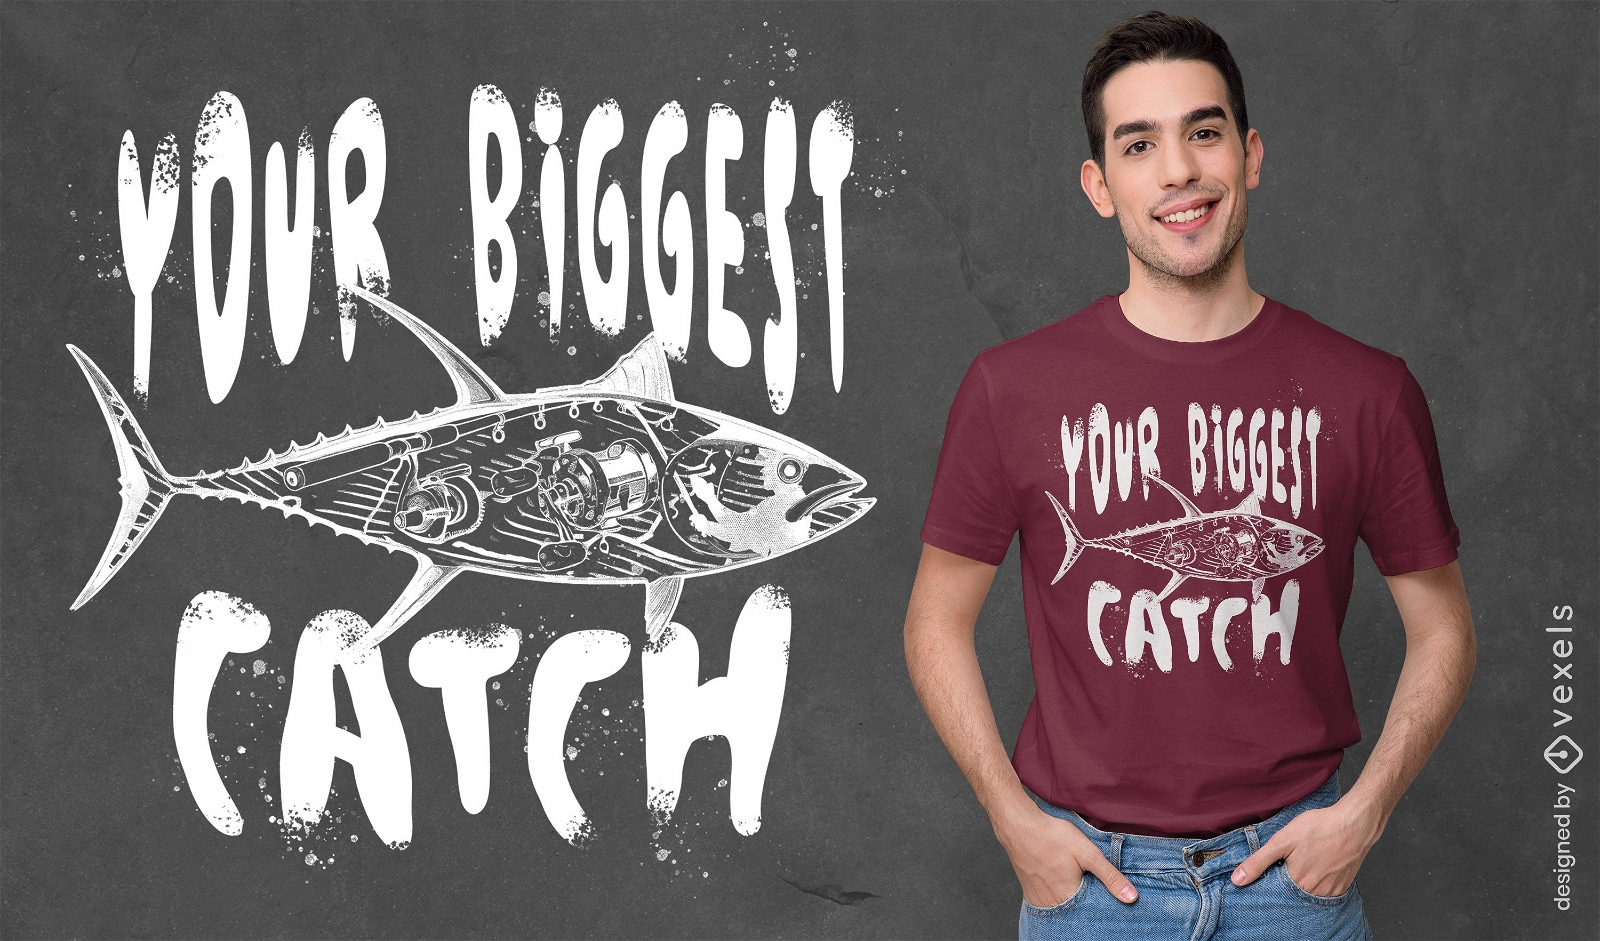 Big catch fish t-shirt design